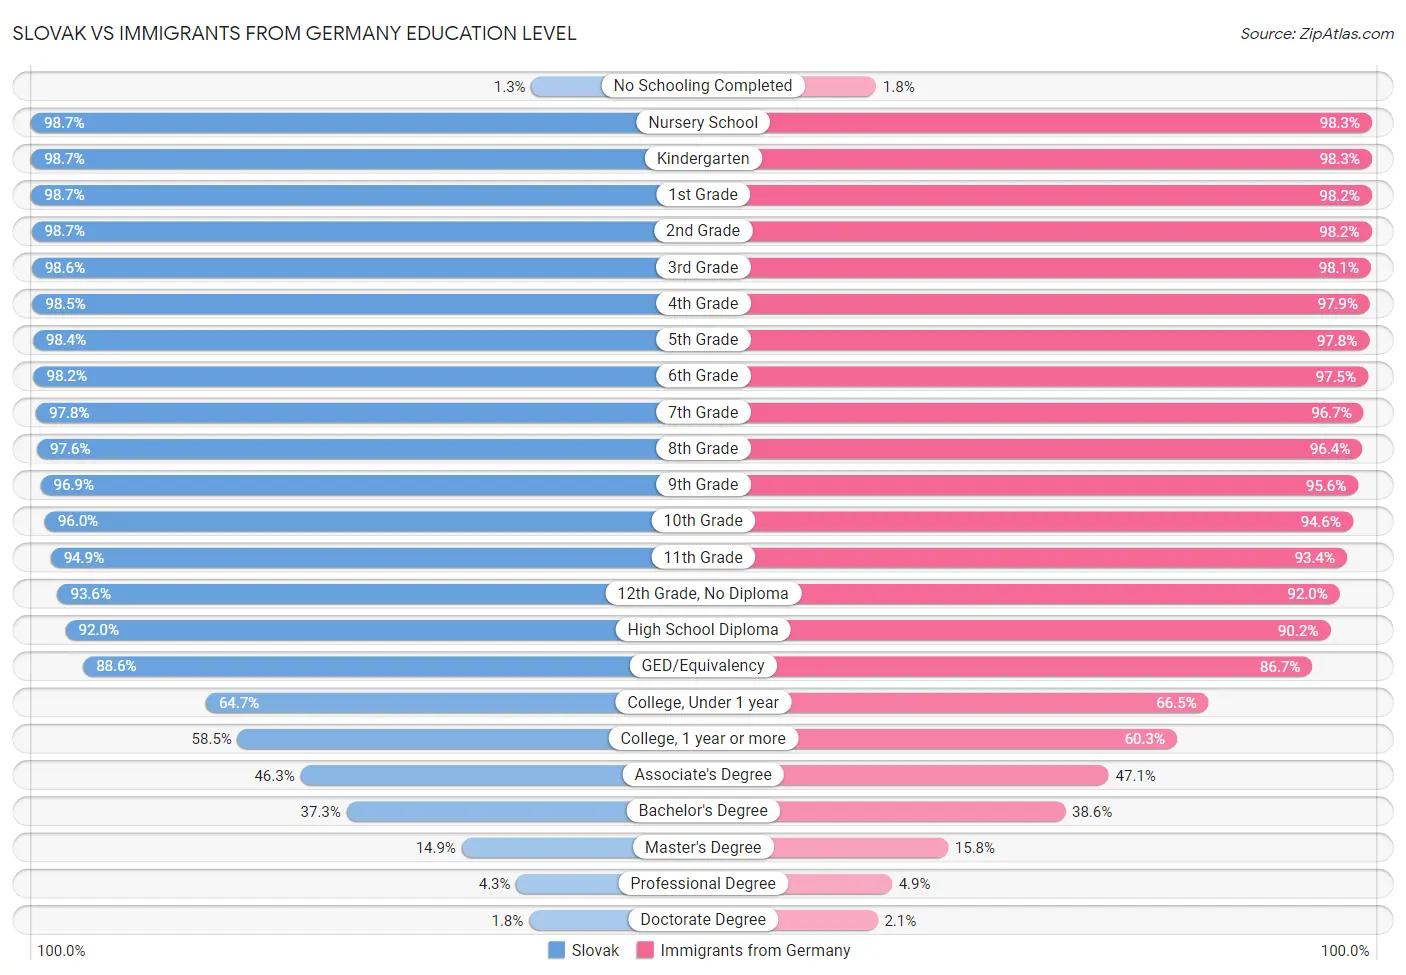 Slovak vs Immigrants from Germany Education Level